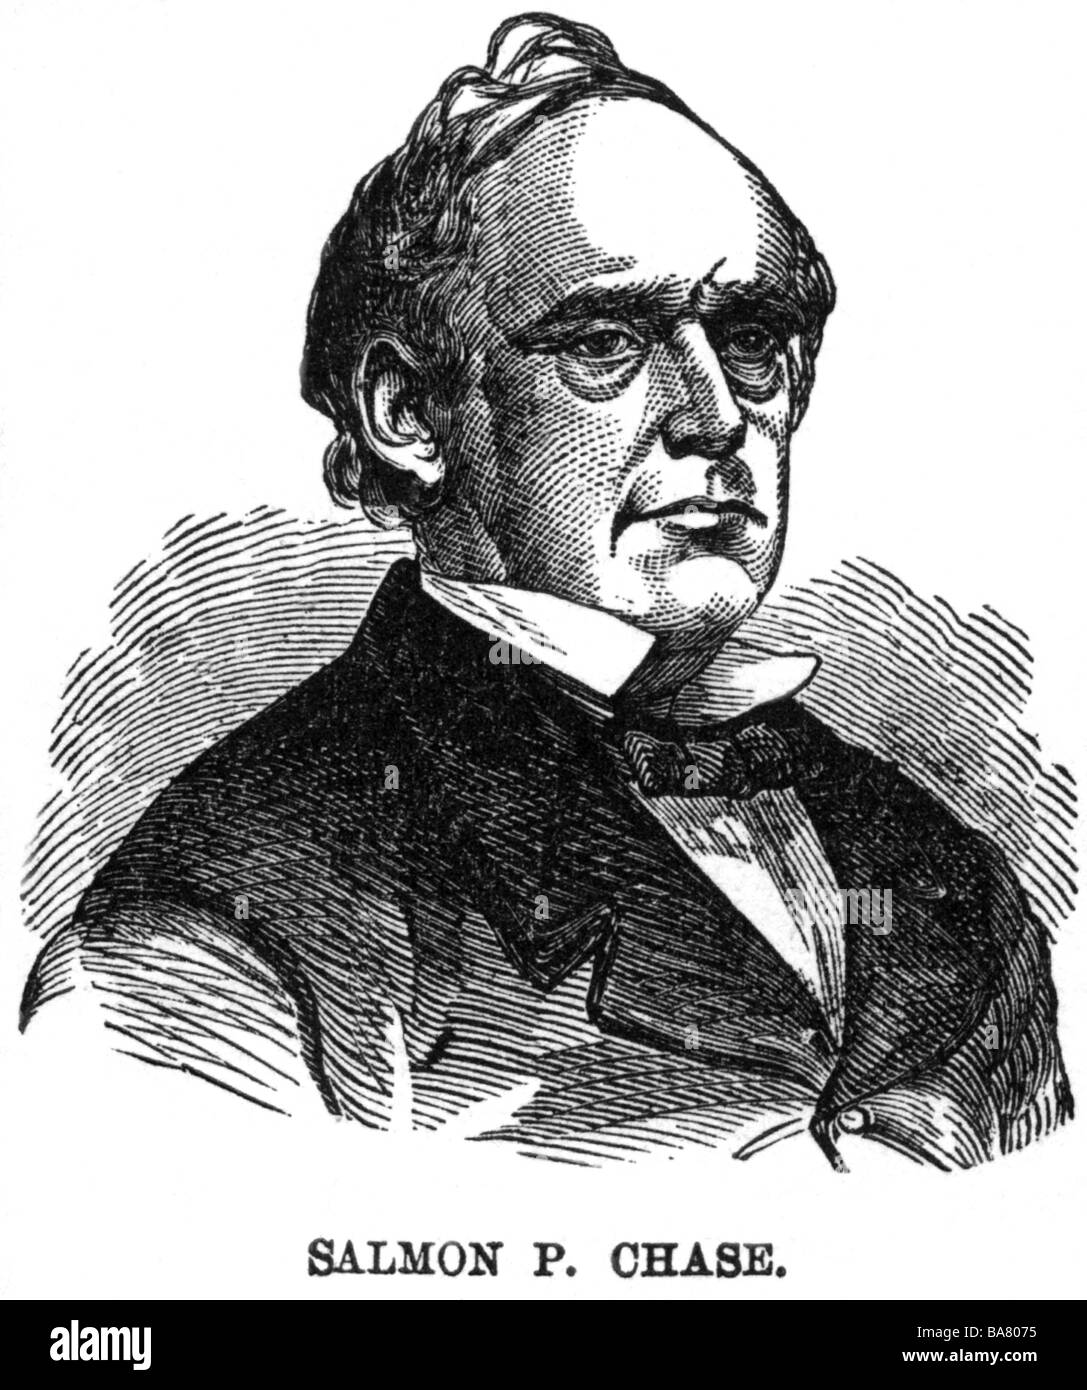 Chase, Salmon P., 13.1.1808 - 7.5.1873, American politician (Rep.), Secretary of the Treasury 1.7.1831 - 30.6.1864, portrait, wood engraving, 19th century, , Stock Photo